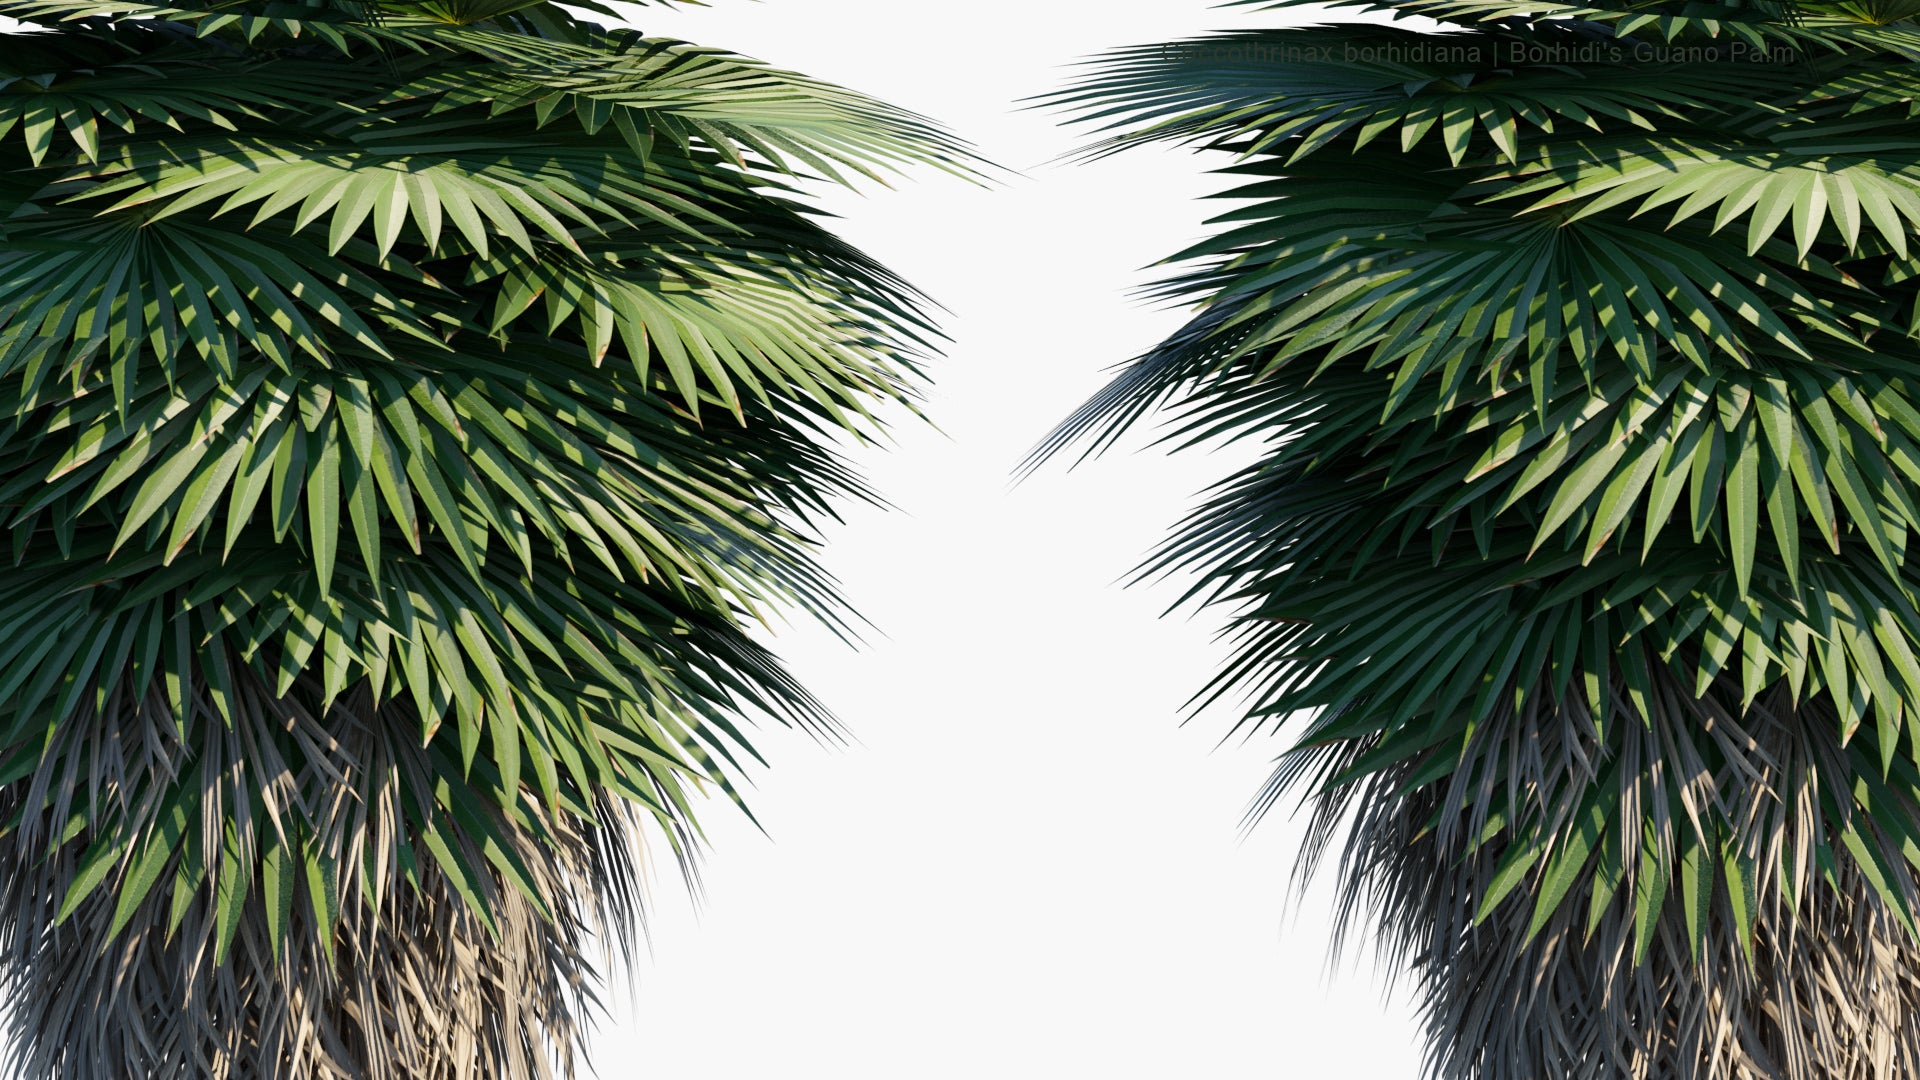 Low Poly Coccothrinax Borhidiana - Guano, Borhidi's Guano Palm (3D Model)